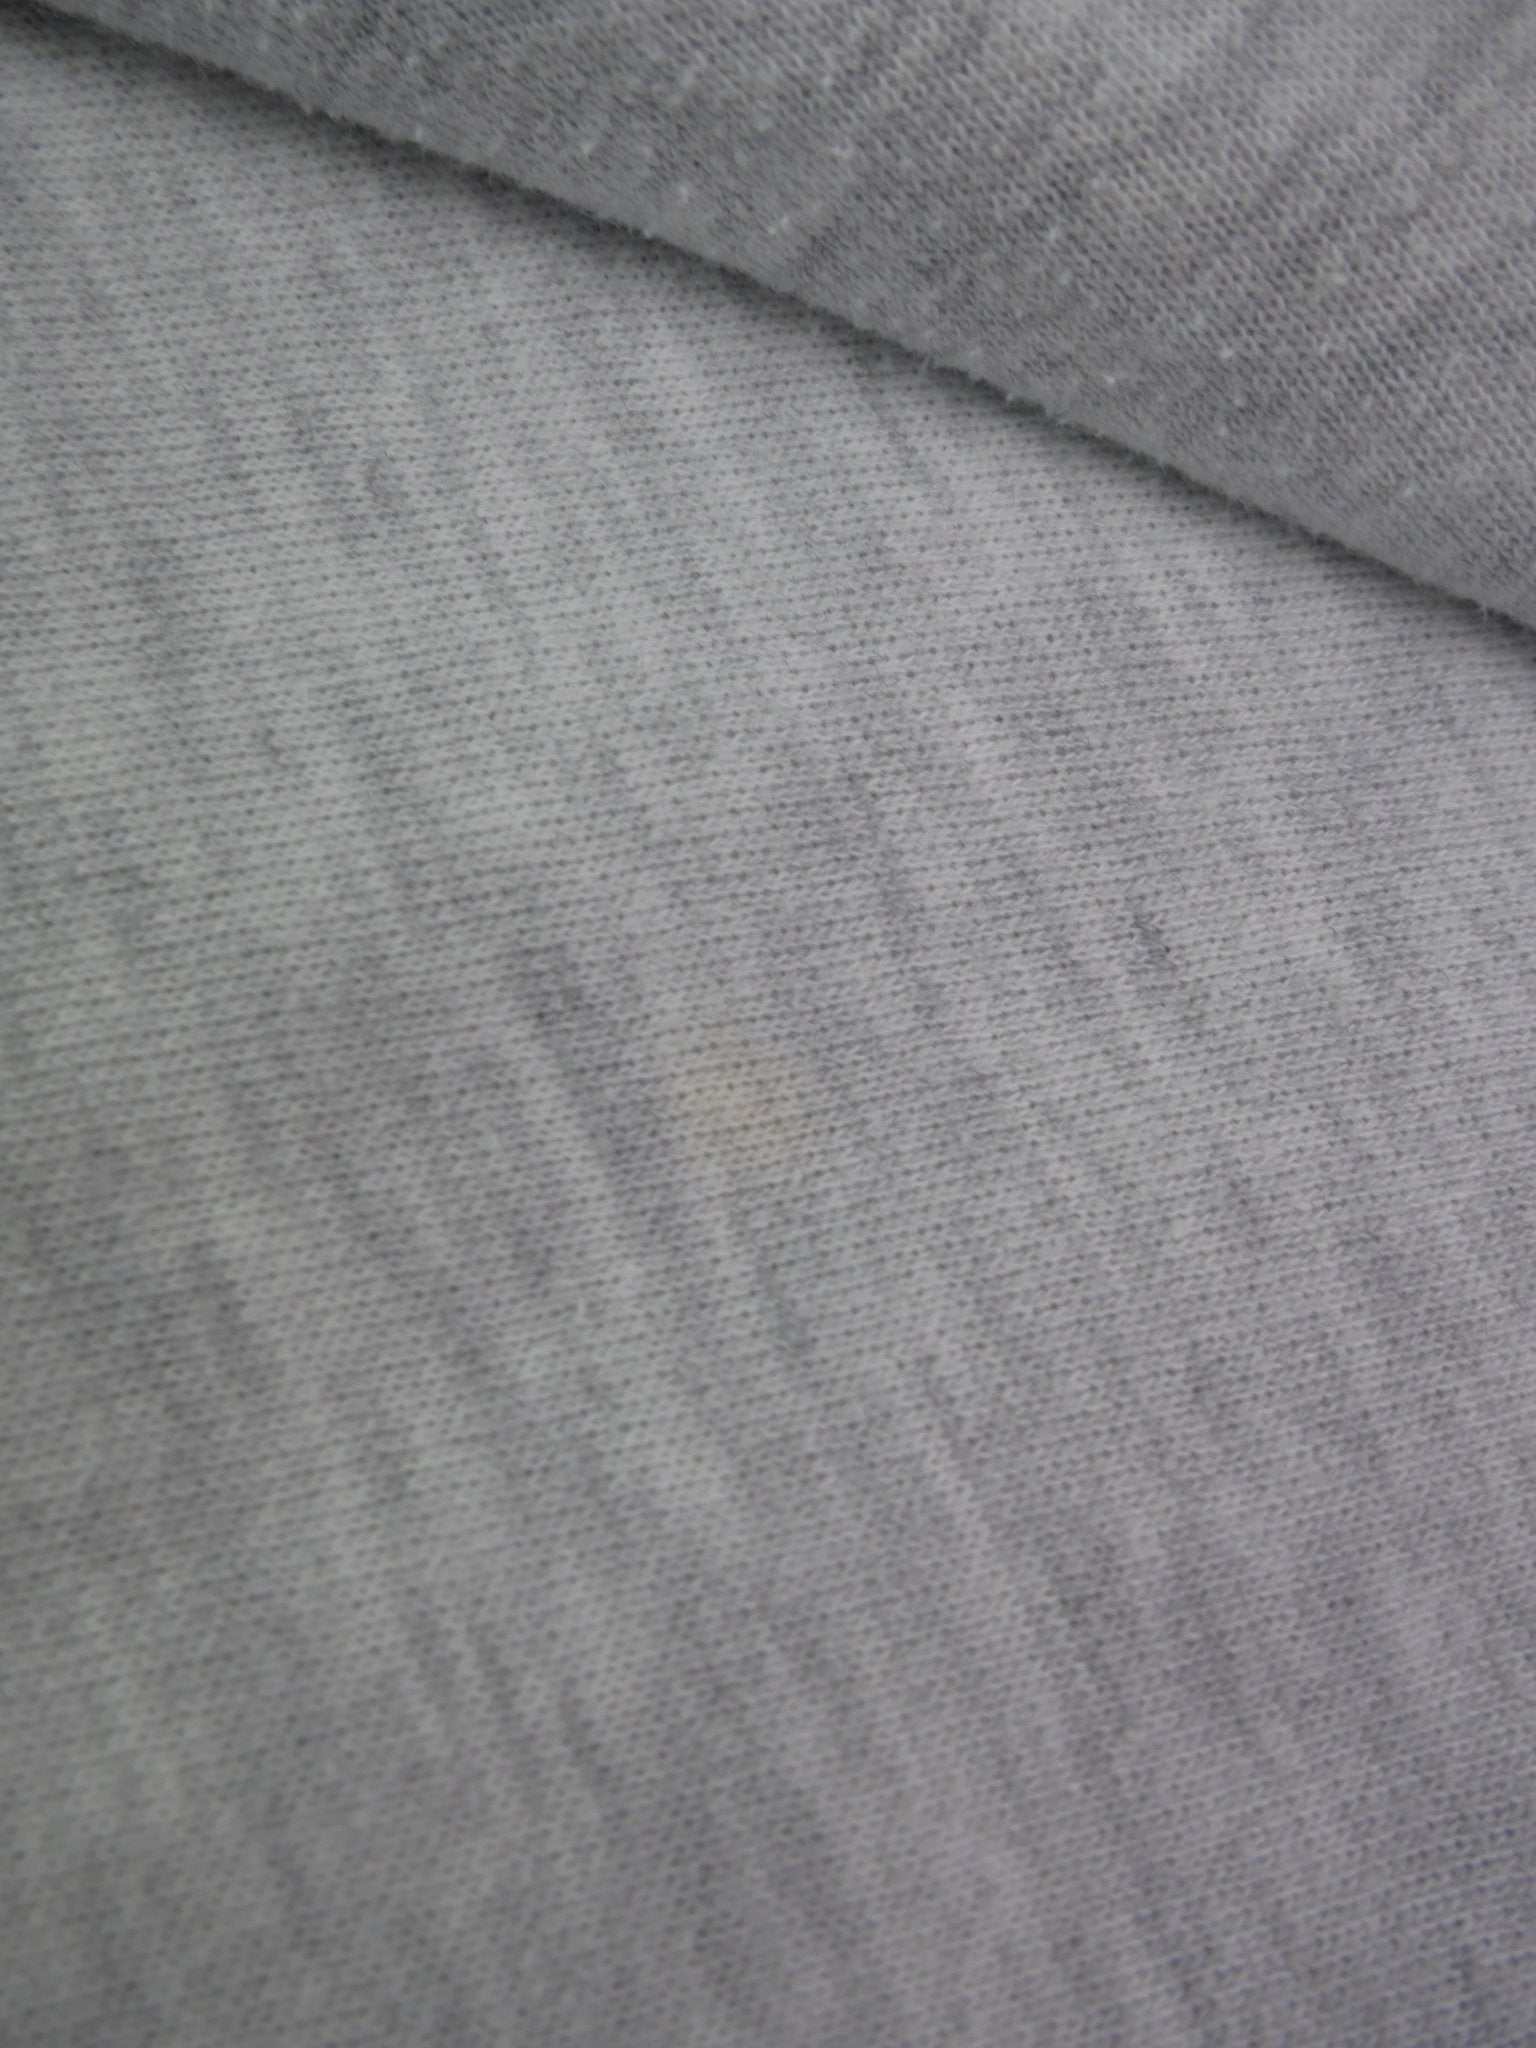 Belvidere Bucks printed graphic grey Sweater - Peeces